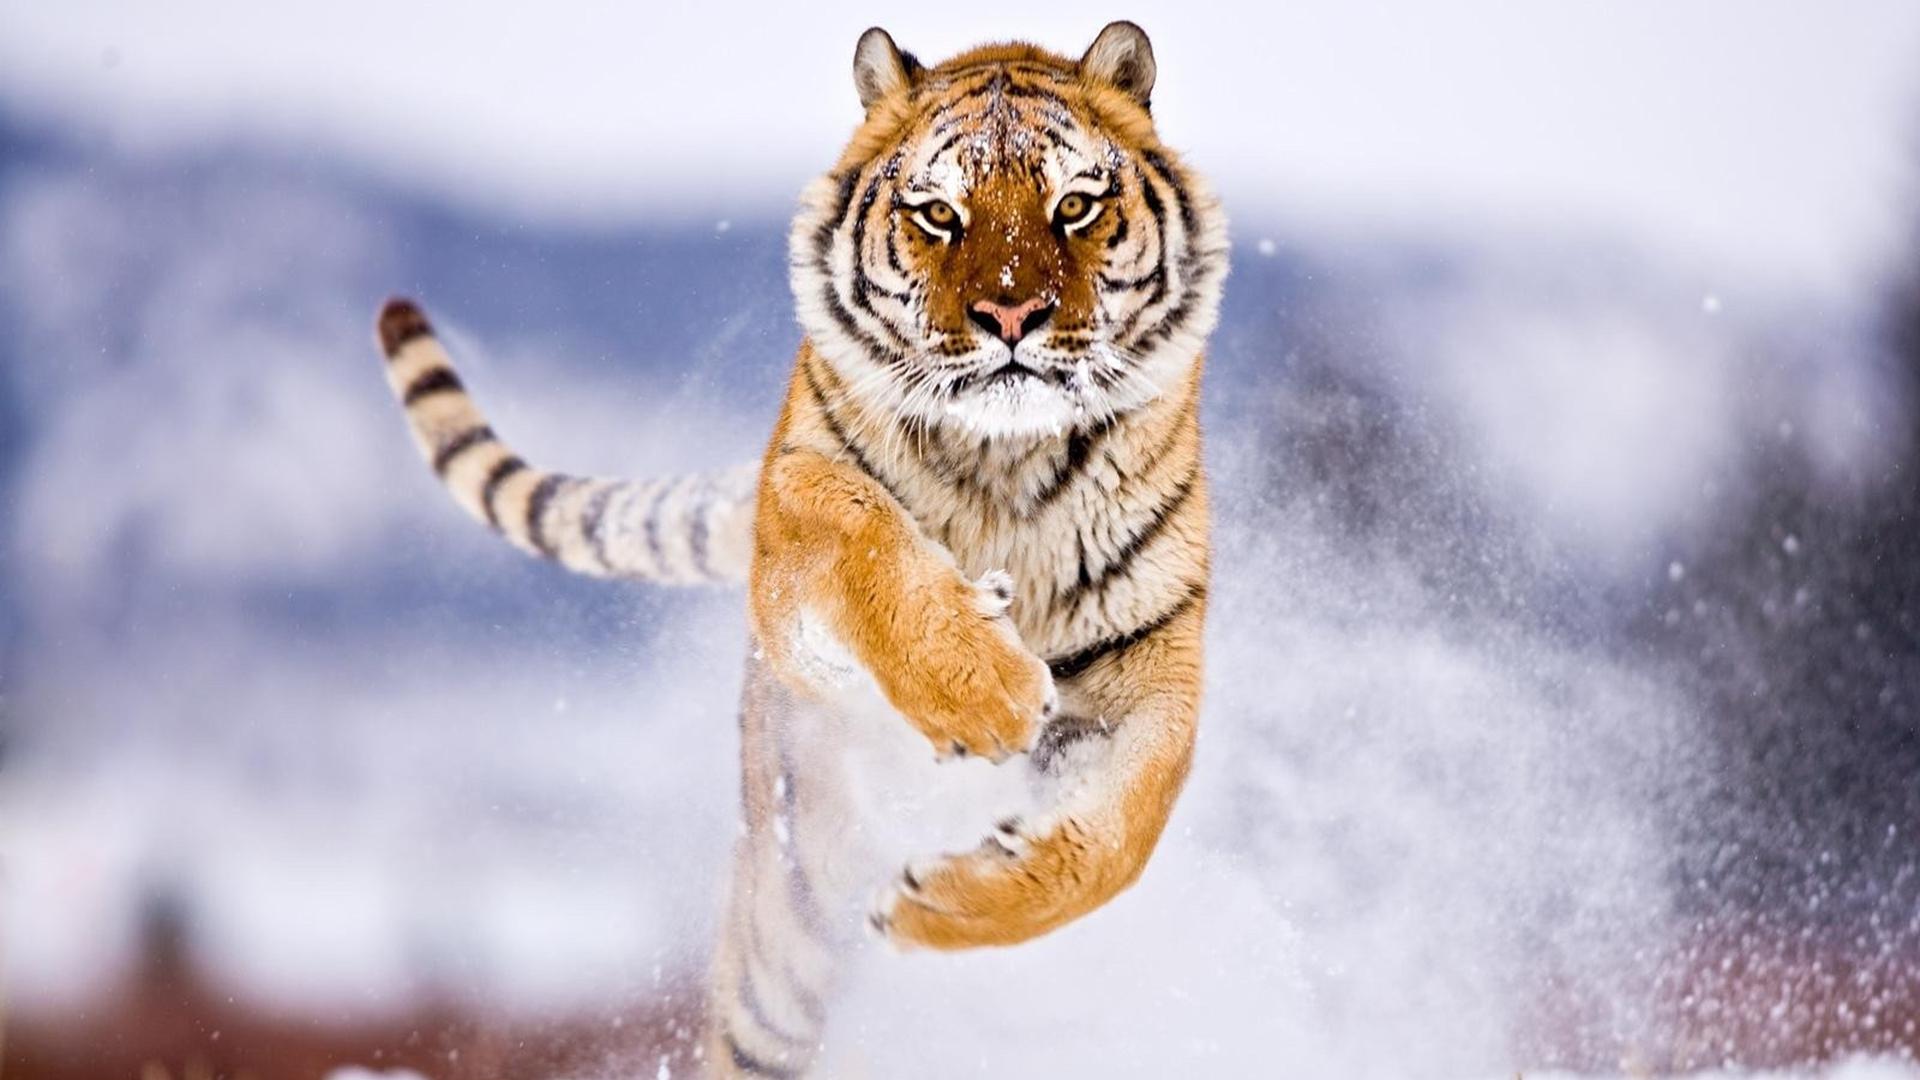 Animals, Tiger, Fur, Yellow Eyes, Snow, Winter, Photography